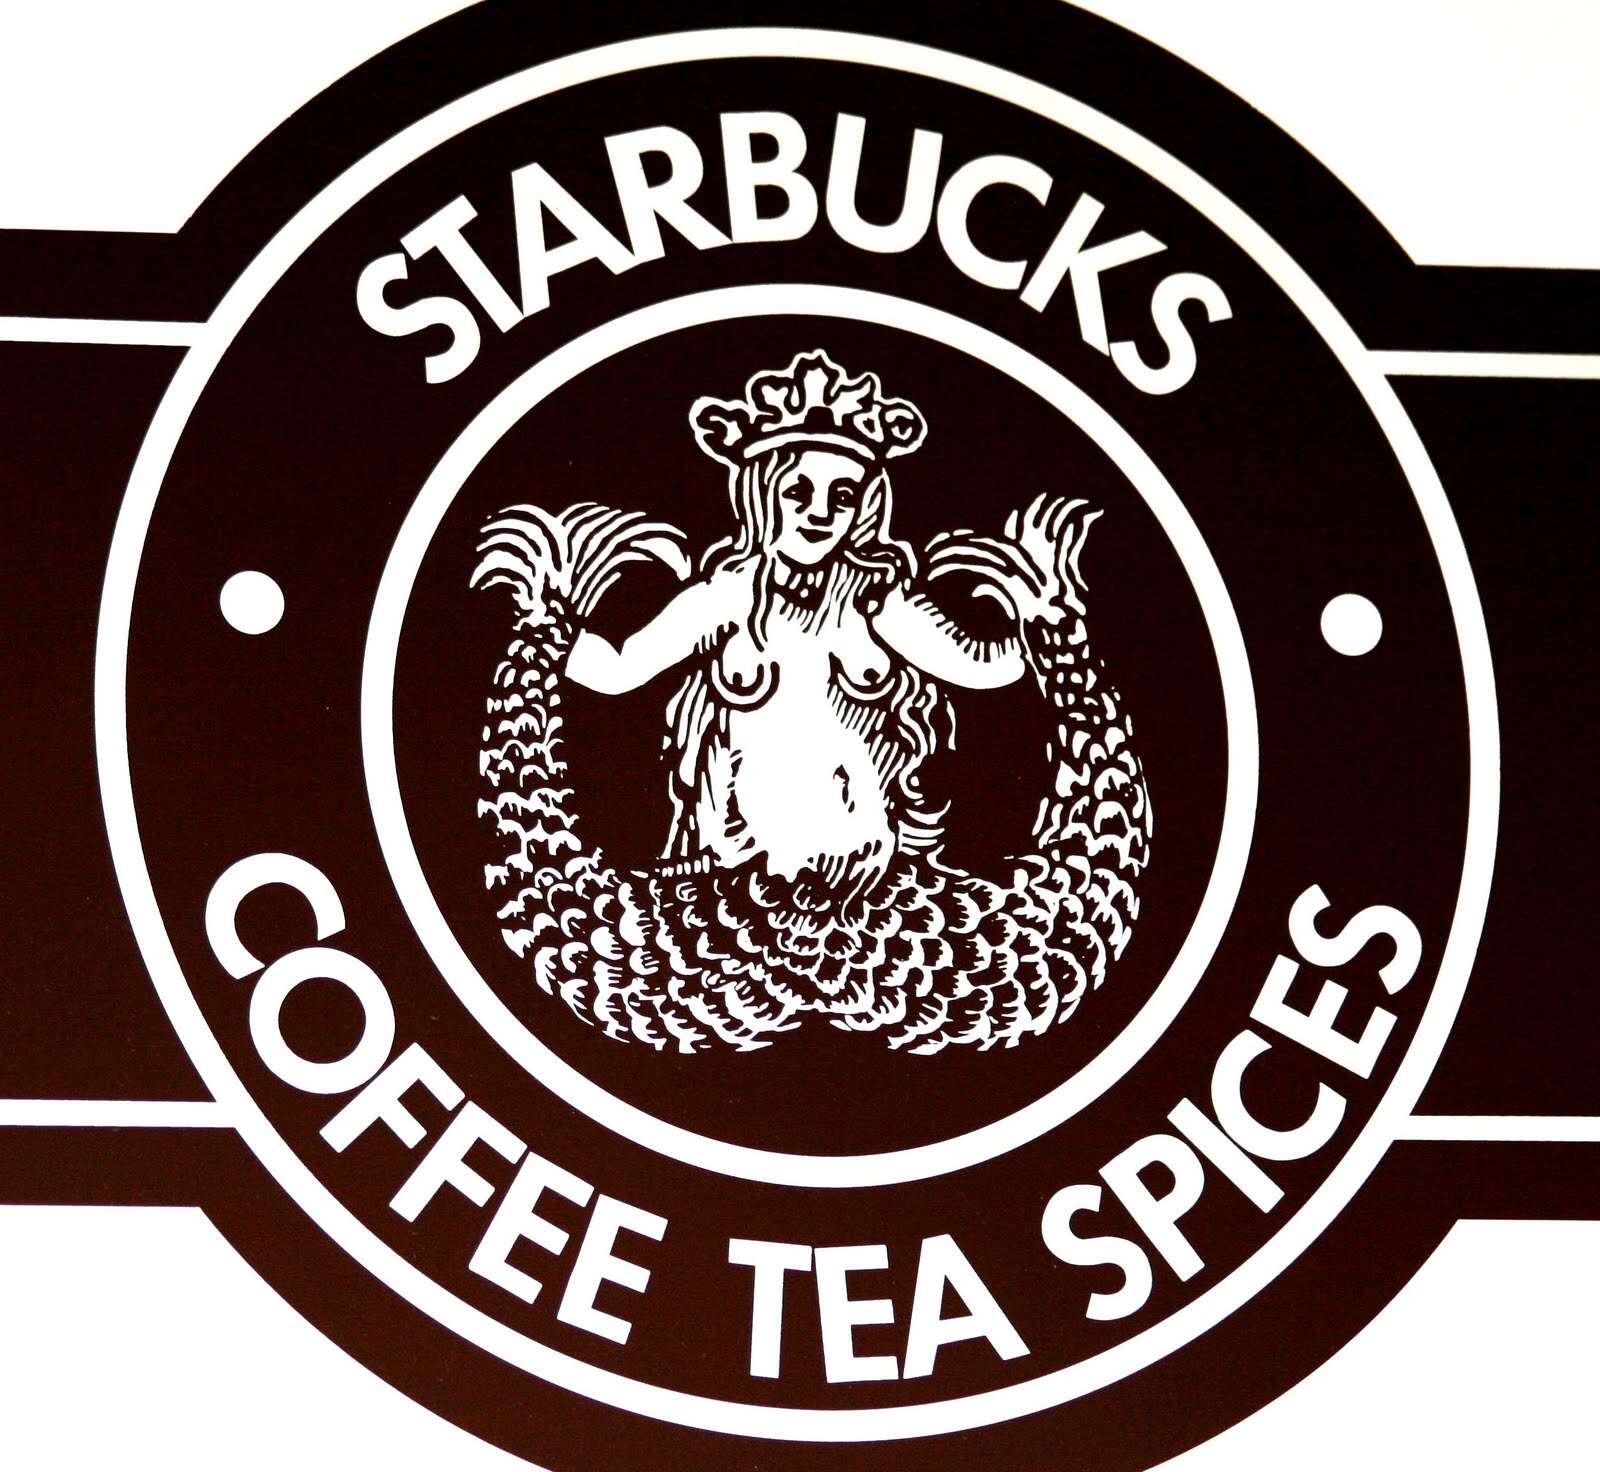 Original Starbucks logo